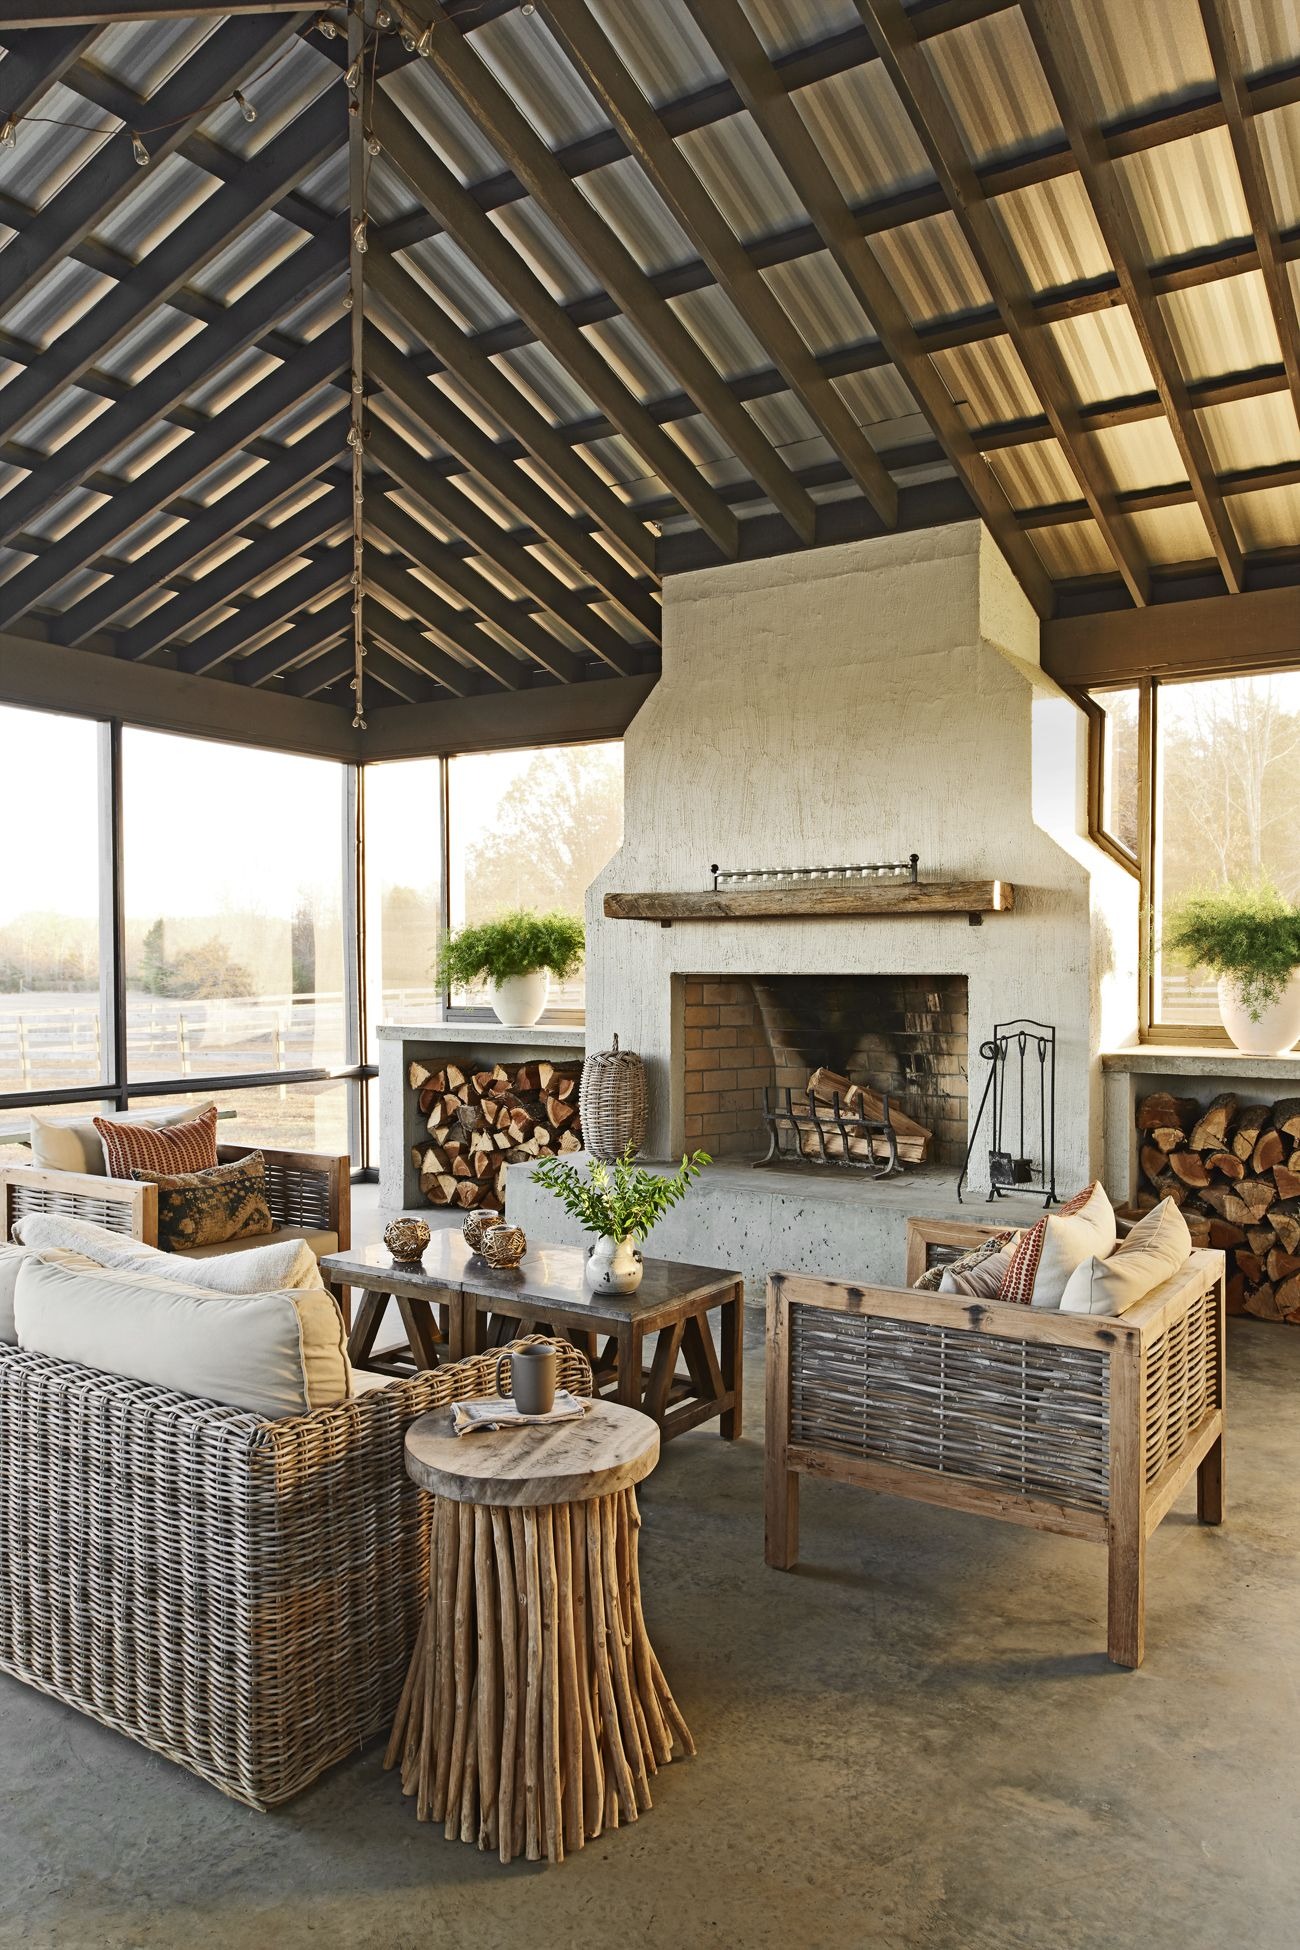 Suburban Design for an Outdoor Fireplace